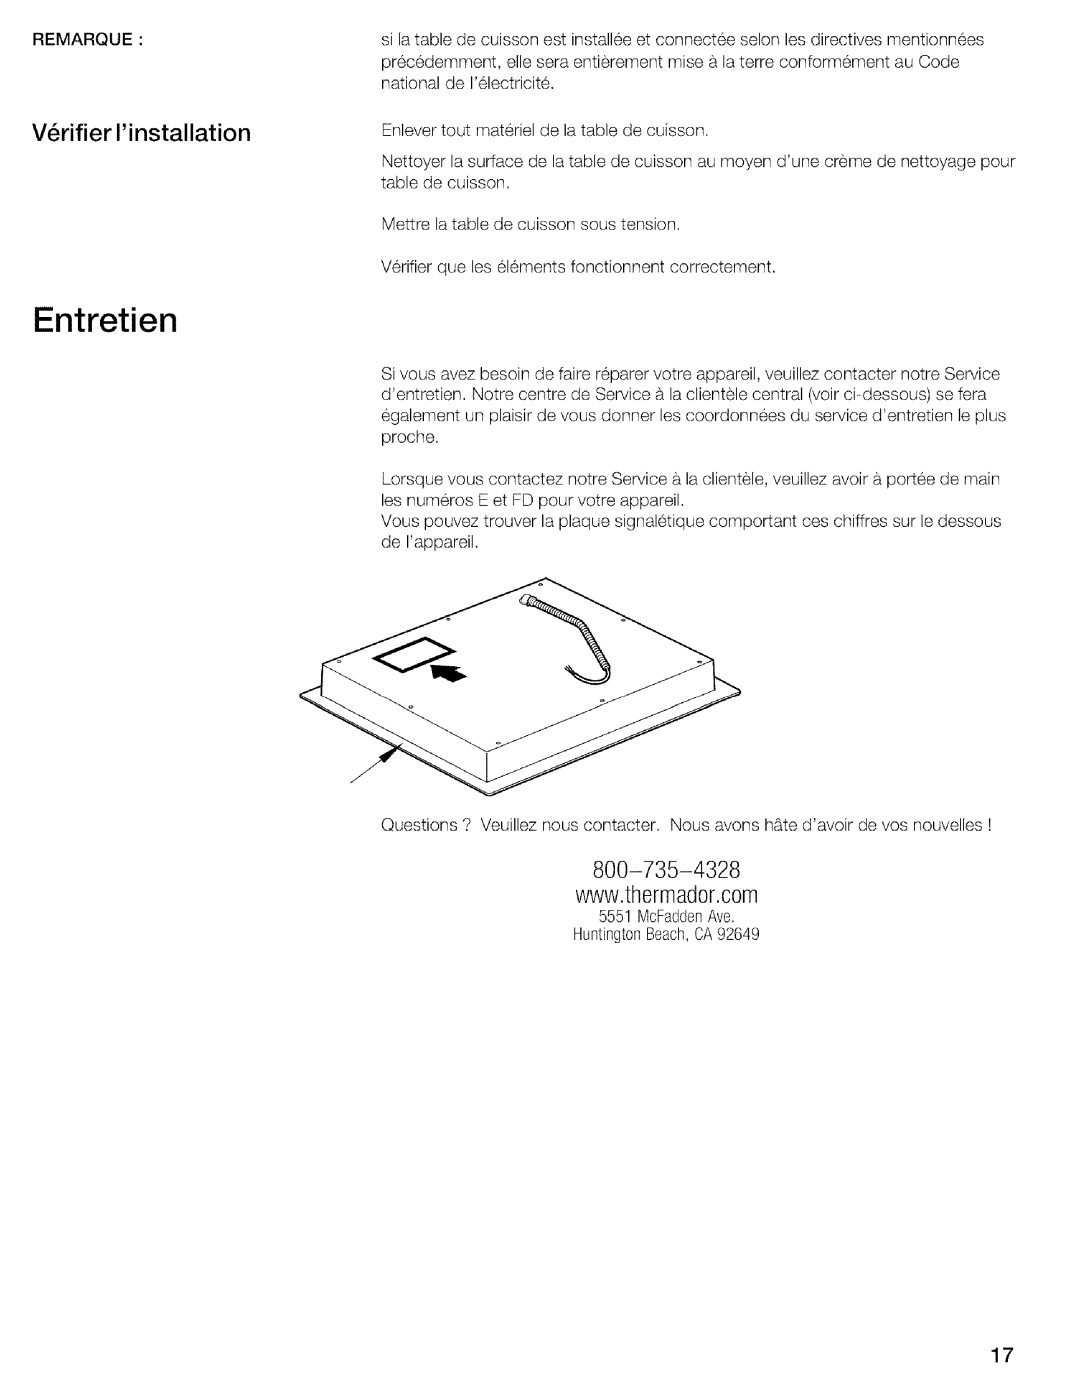 Thermador CIT304EM, CIT304DS installation instructions Entretien, V6rifier Iinstallation 